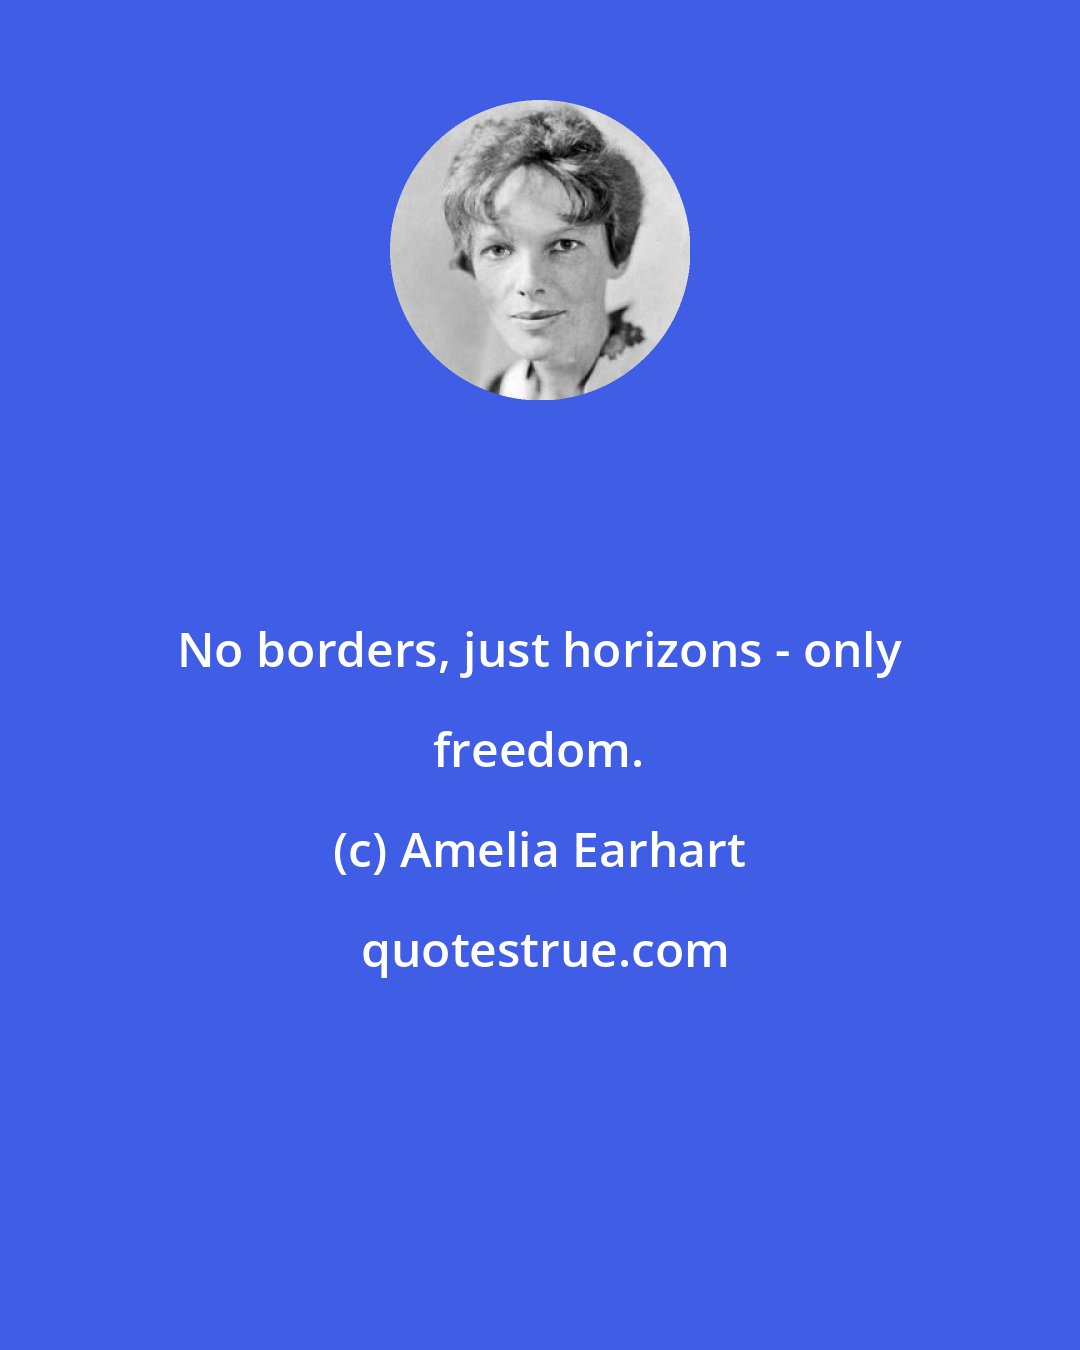 Amelia Earhart: No borders, just horizons - only freedom.